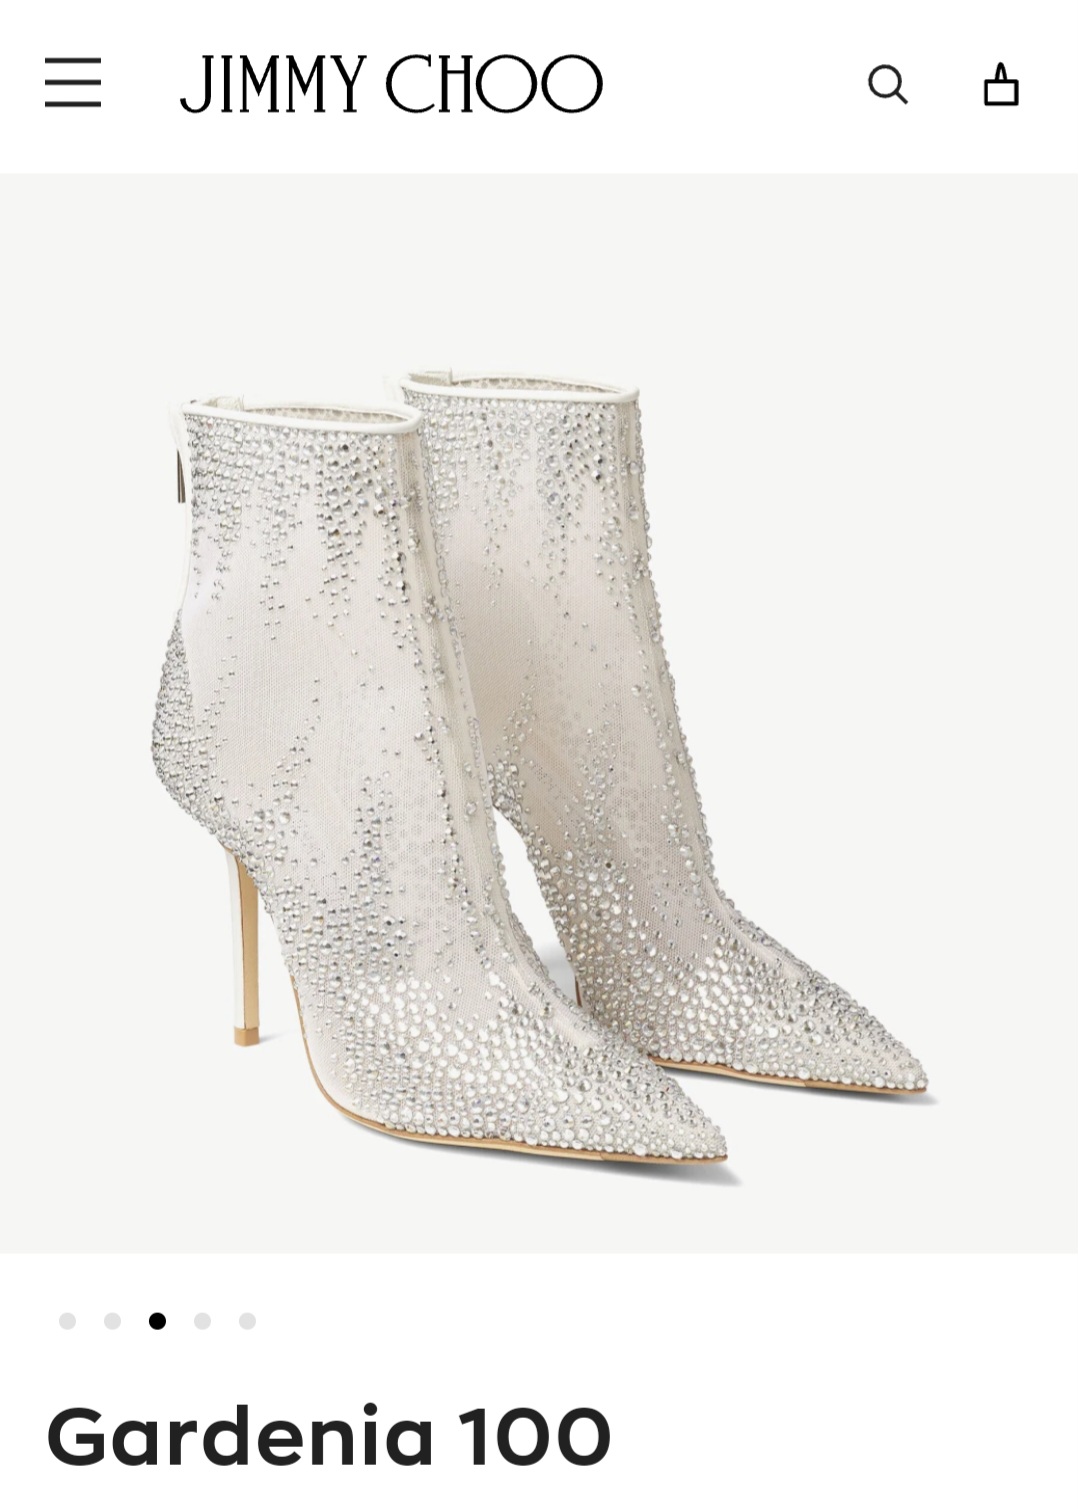 Jimmy Choo Gardenia 100 angkle boots ballerina White mesh pointed degrade crystals heels